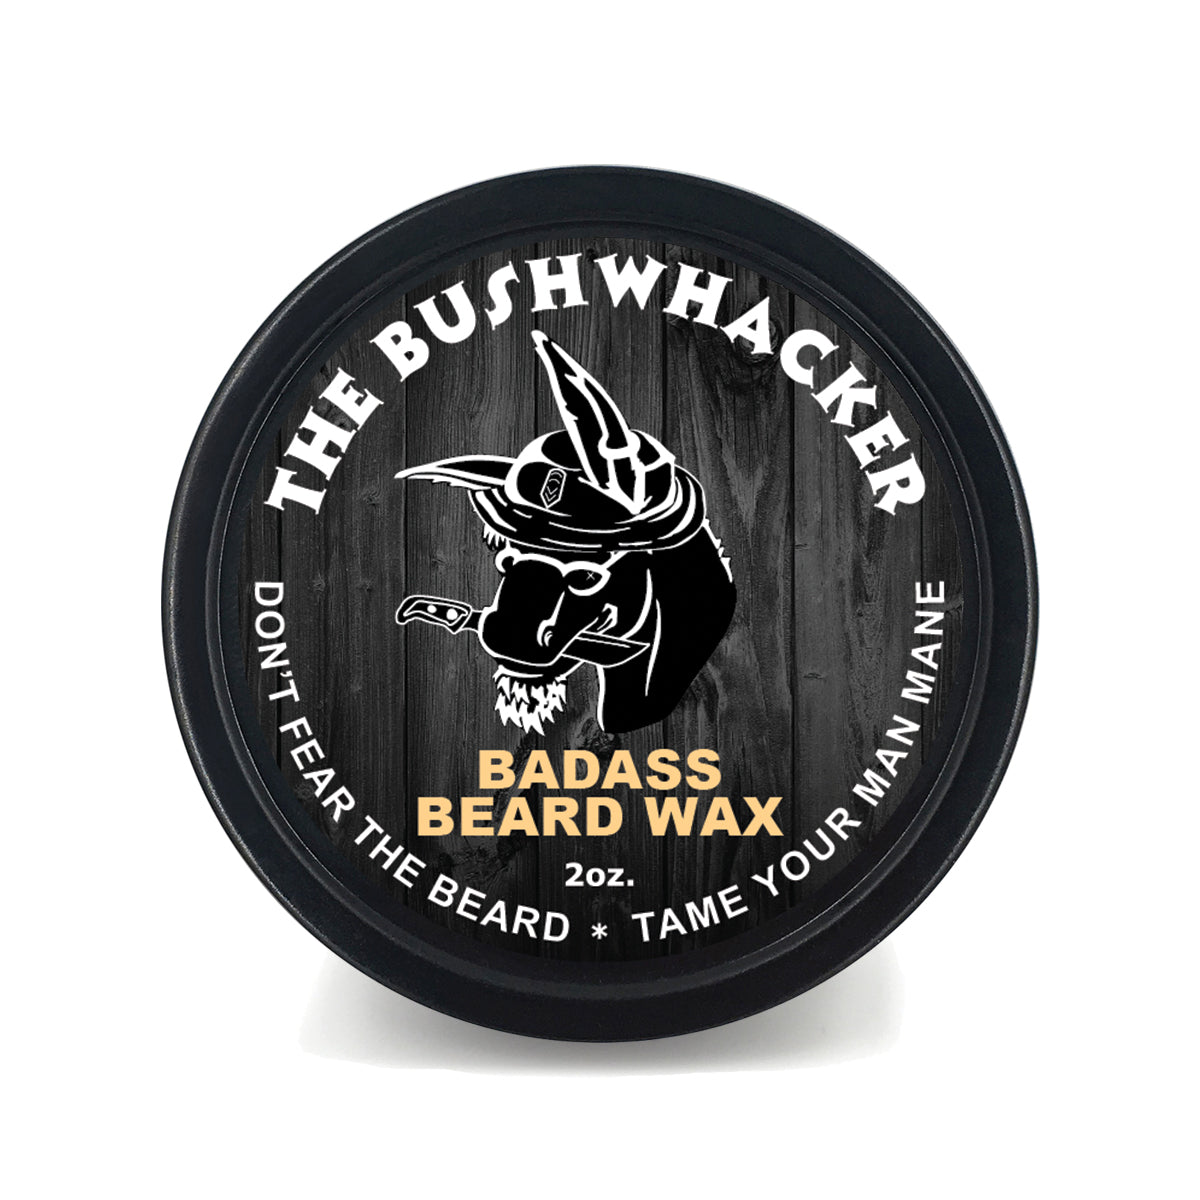 Badass Beard Wax - The Bushwhacker